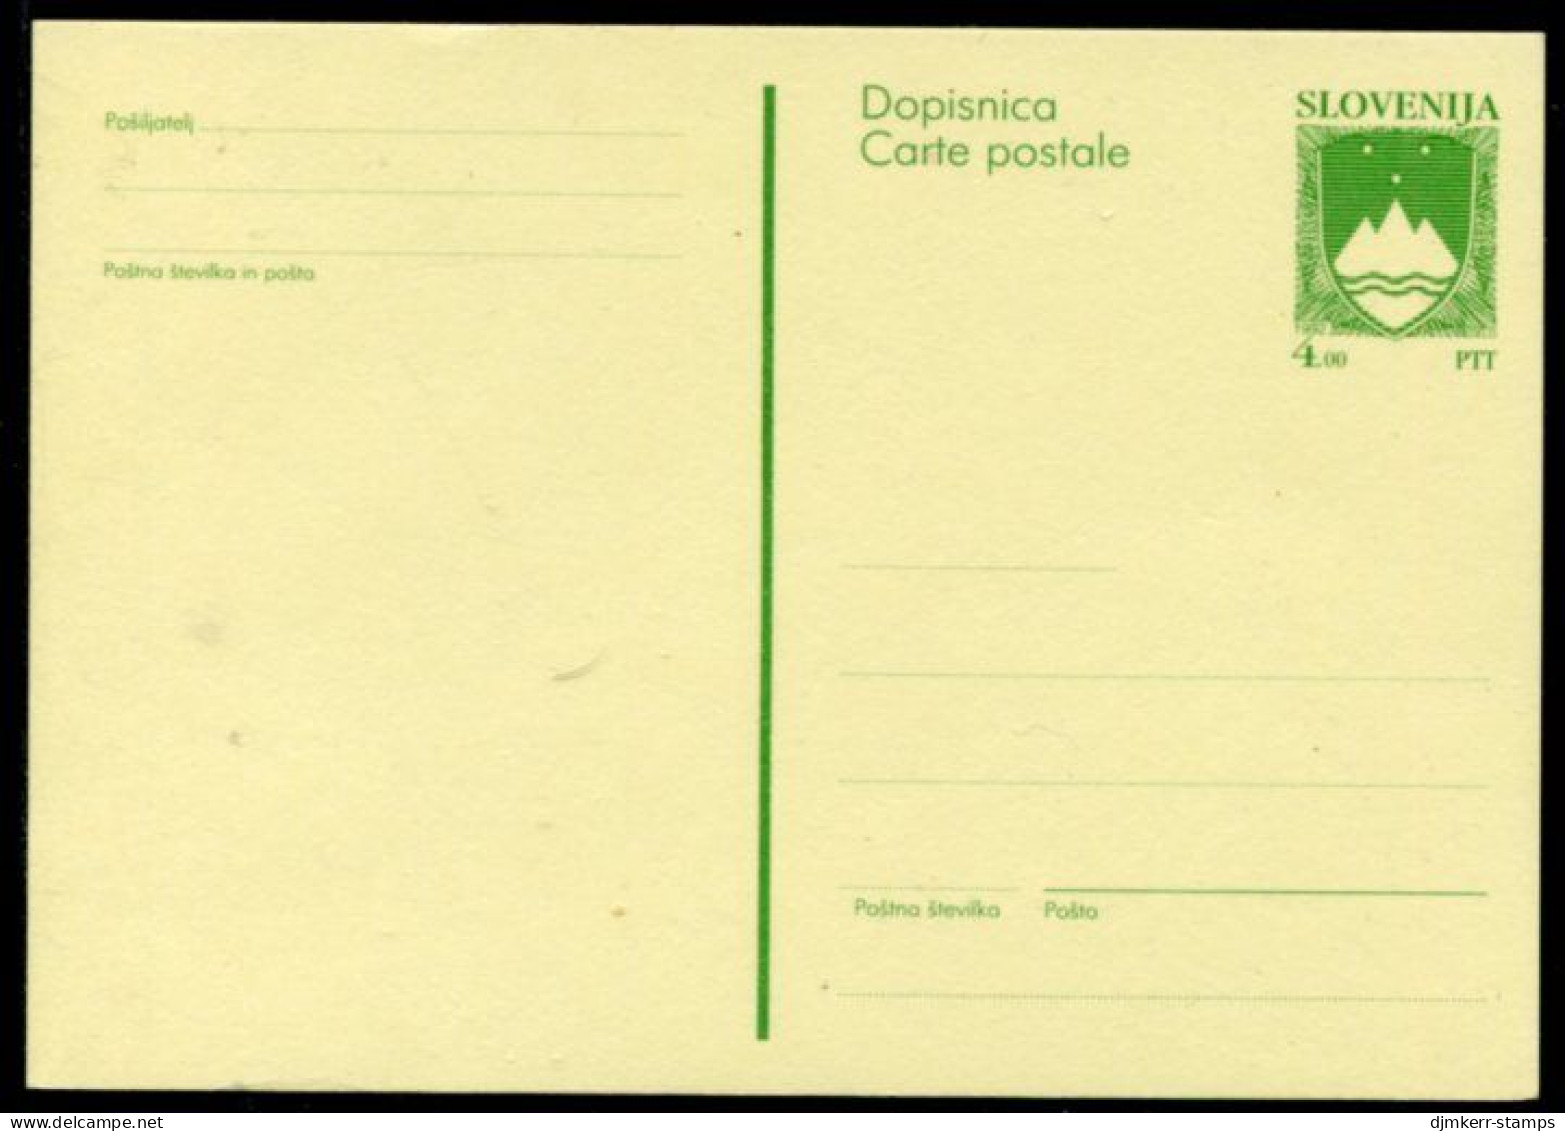 SLOVENIA 1992 4.00 T.  Arms  Stationery Card, Unused.   Michel P1 - Slowenien